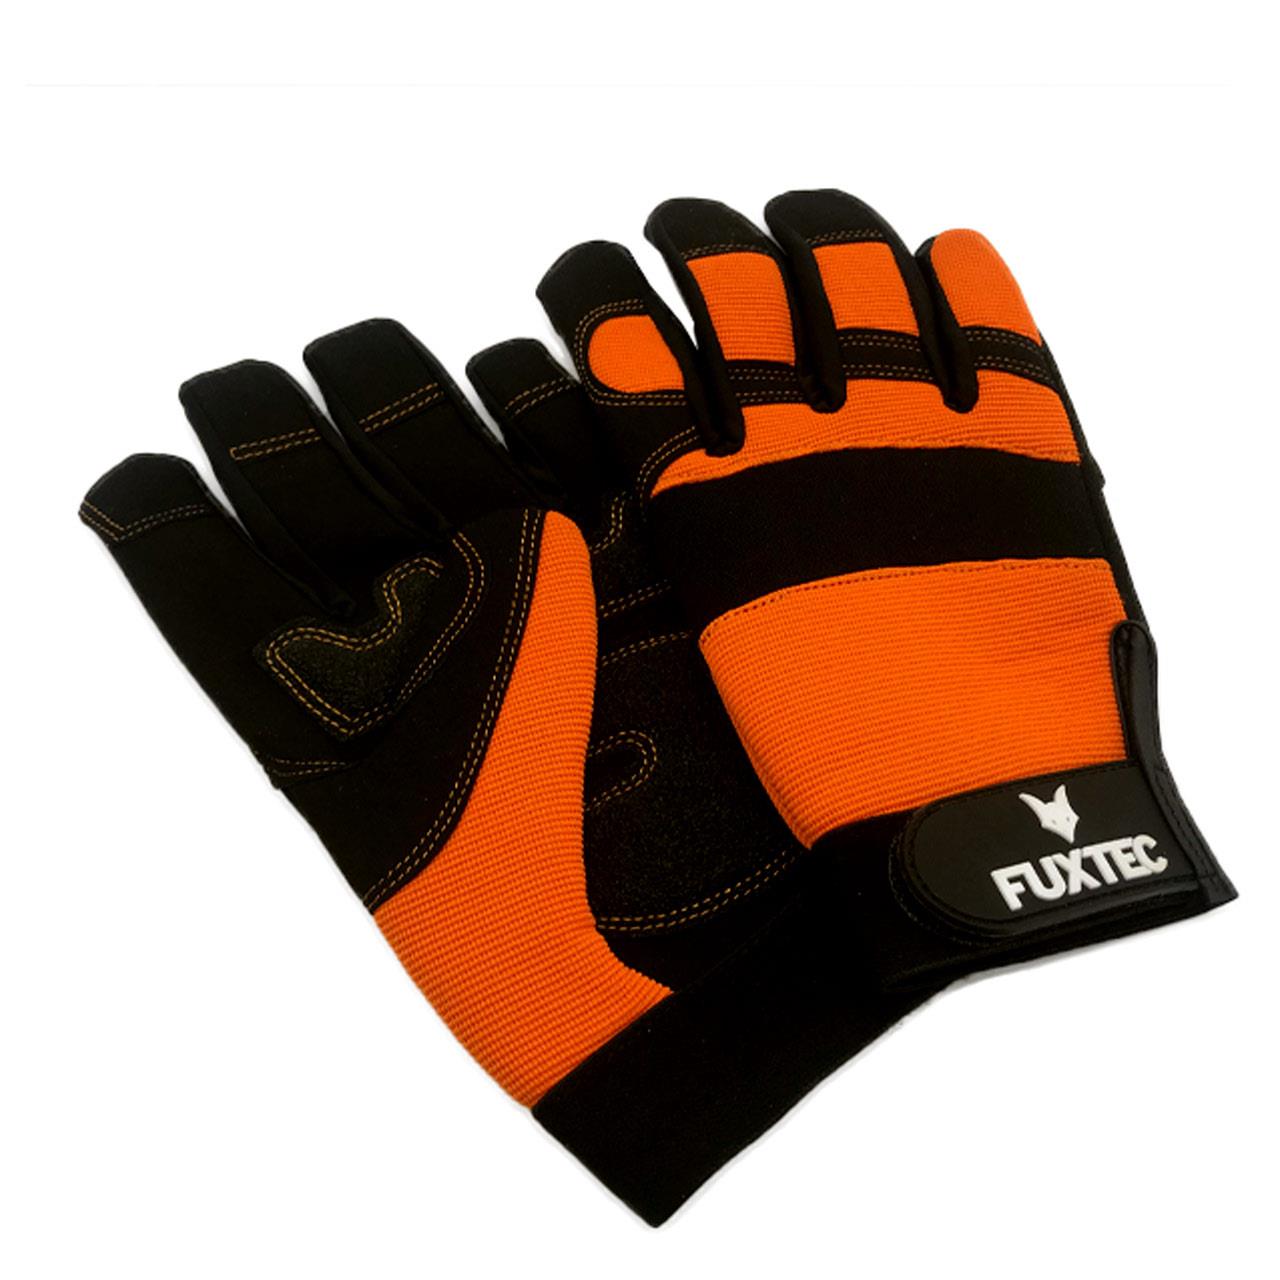 FUXTEC work gloves